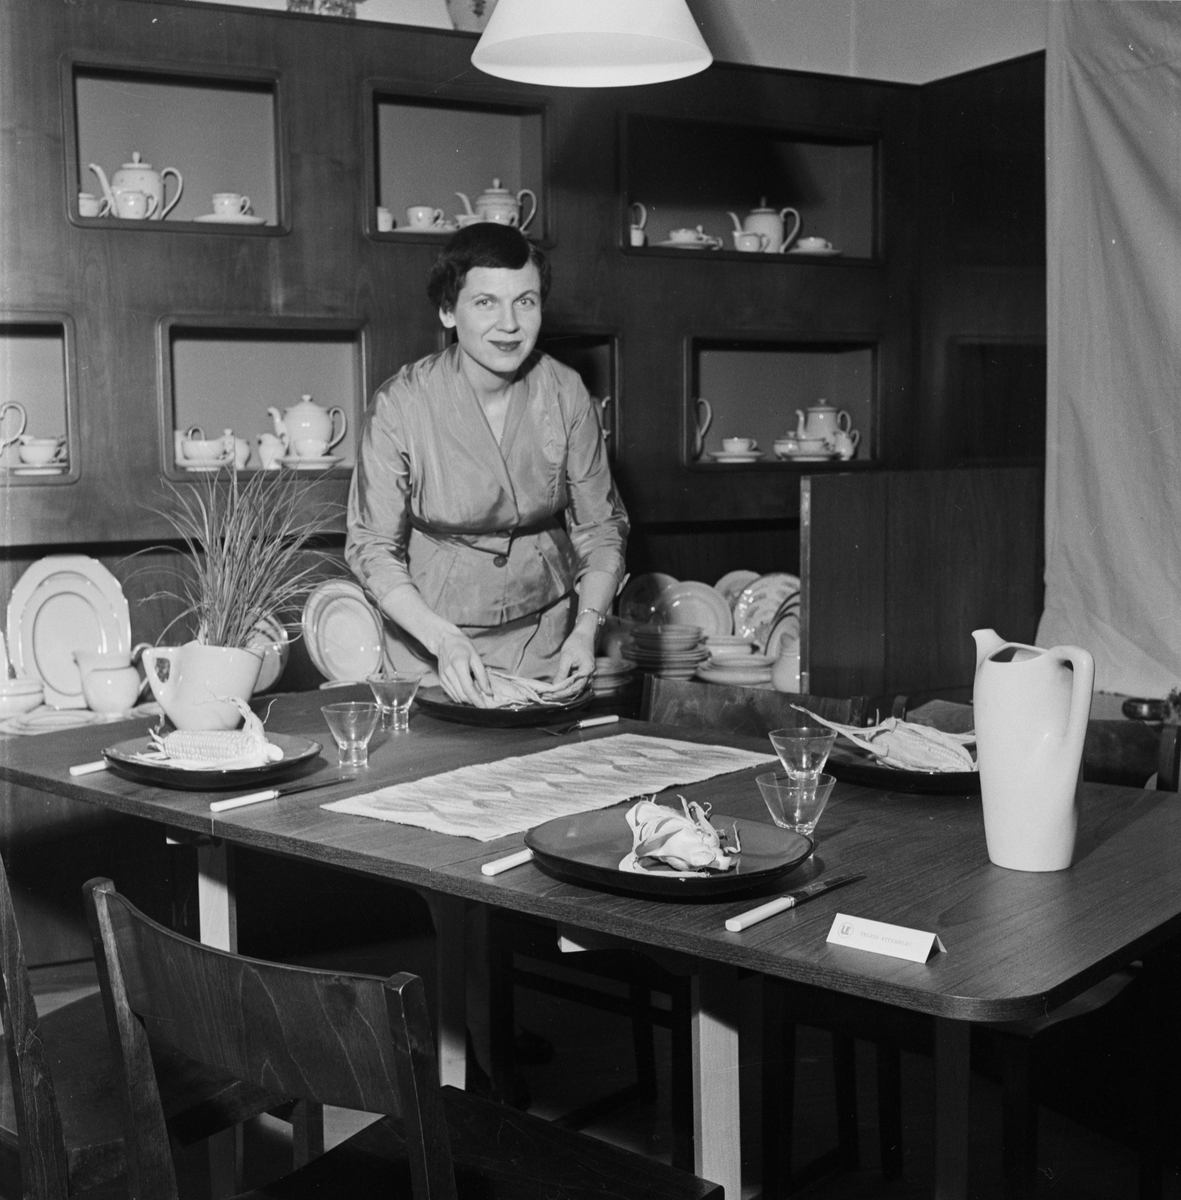 Presenta, dukade bord, Uppsala, september 1954